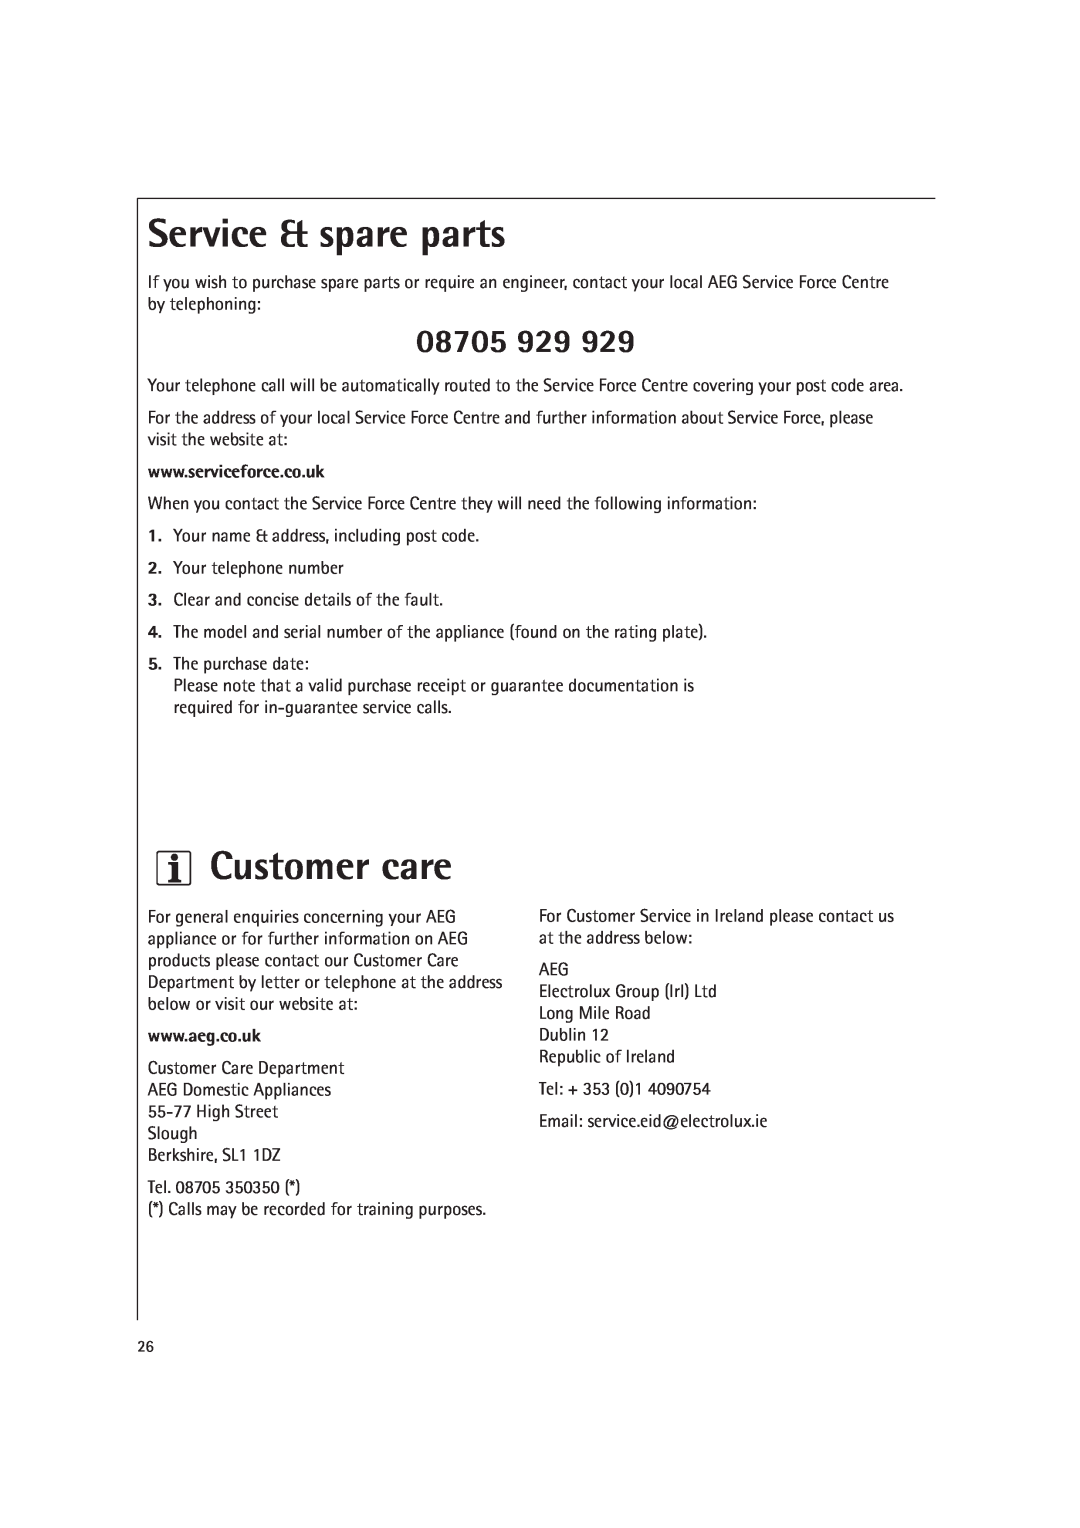 AEG MC1761E, MC1751E operating instructions Service & spare parts, Customer care, 08705 